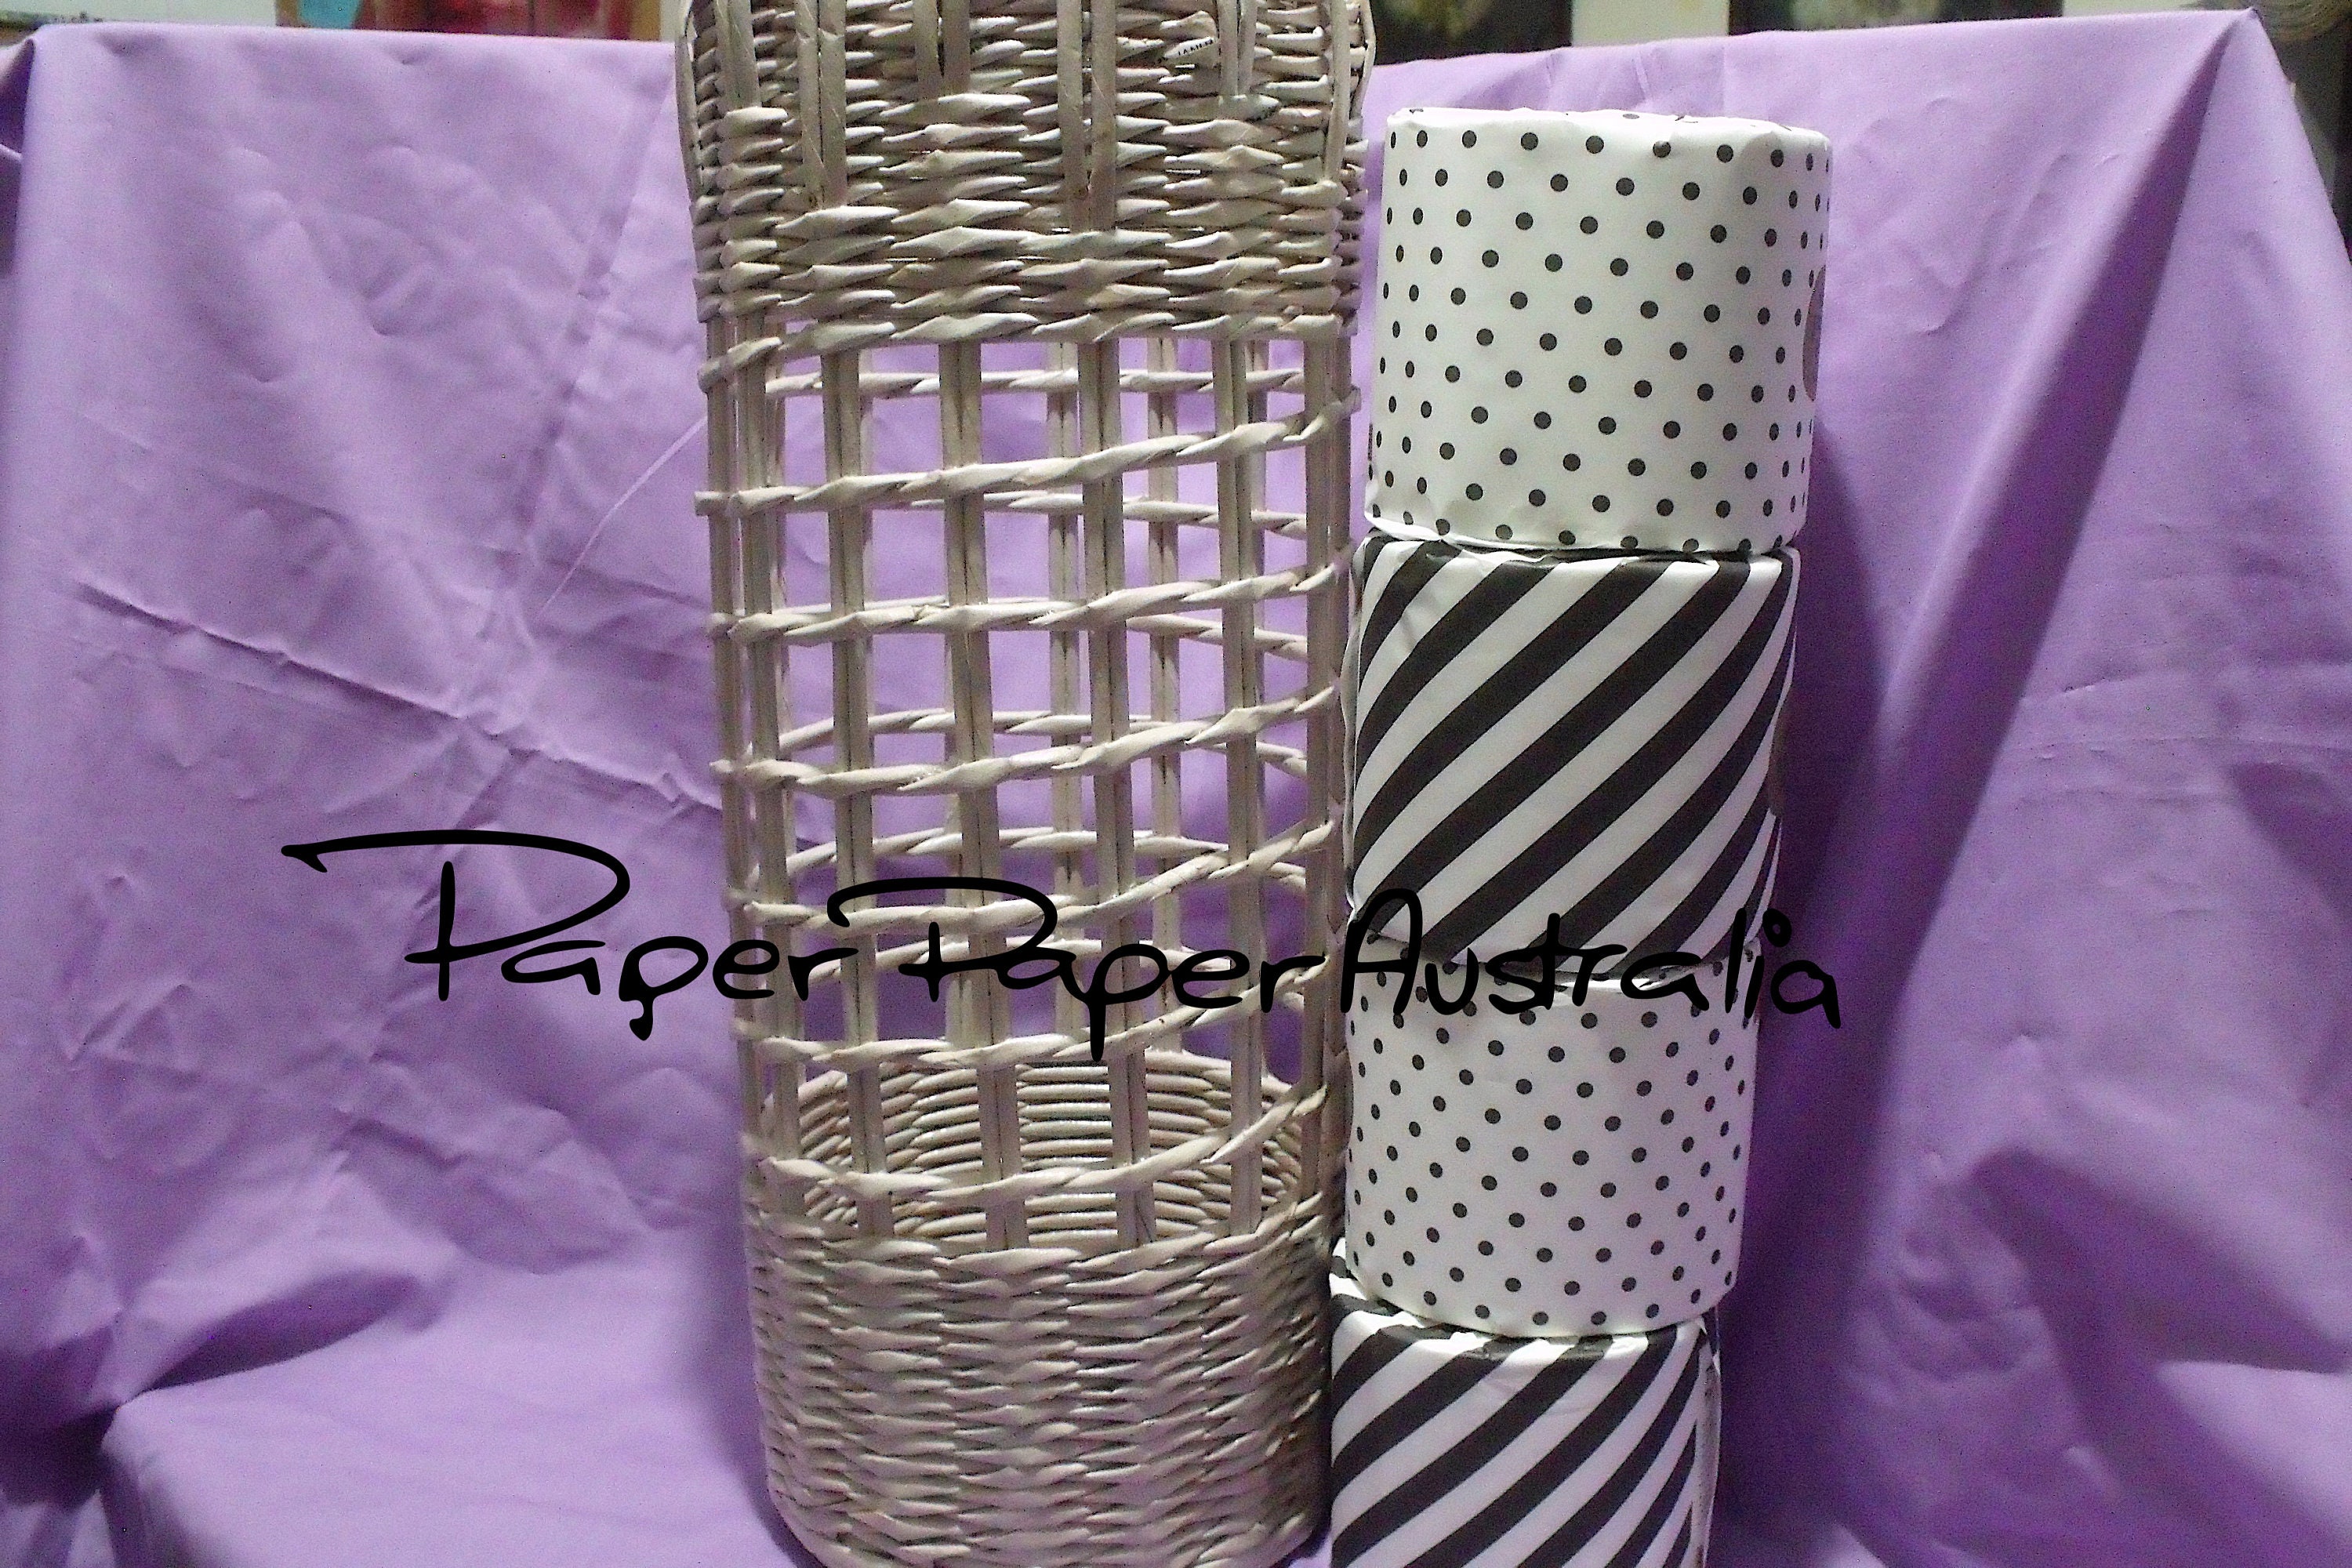 Tall Round Tissue Storage Basket - Toilet Paper Cover - Dear Keaton